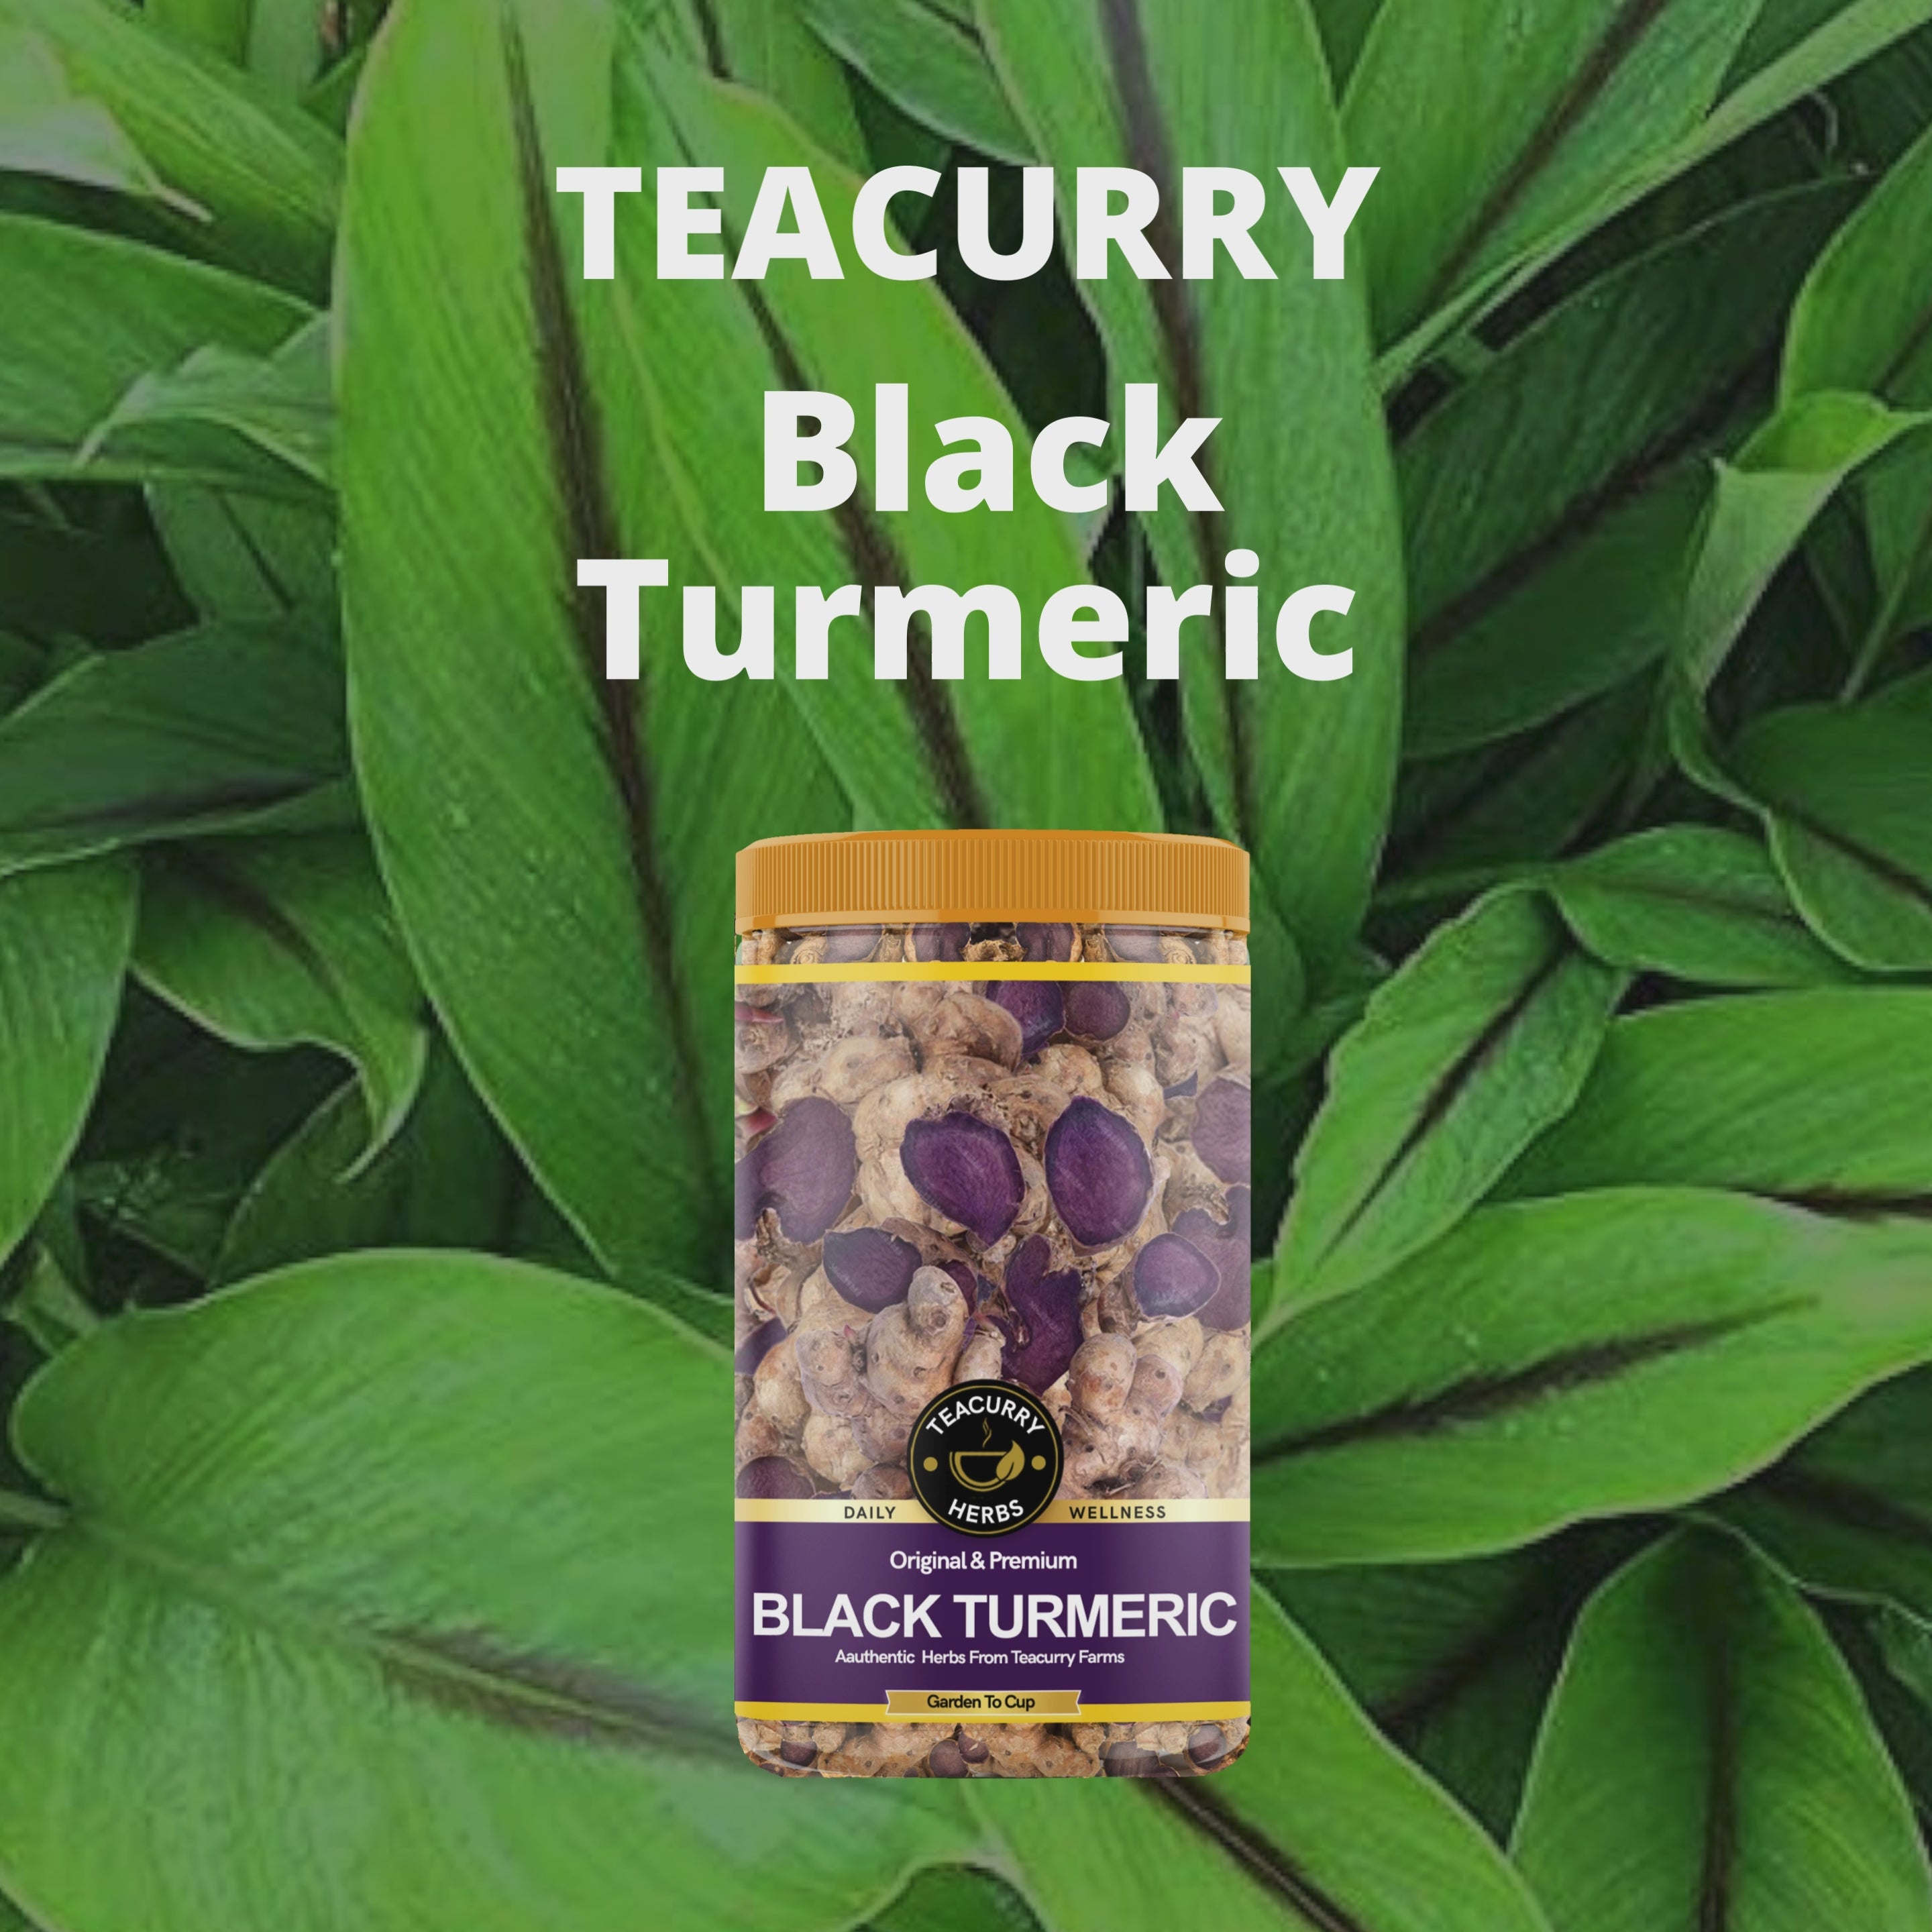 Teacurry Black Turmeric Video